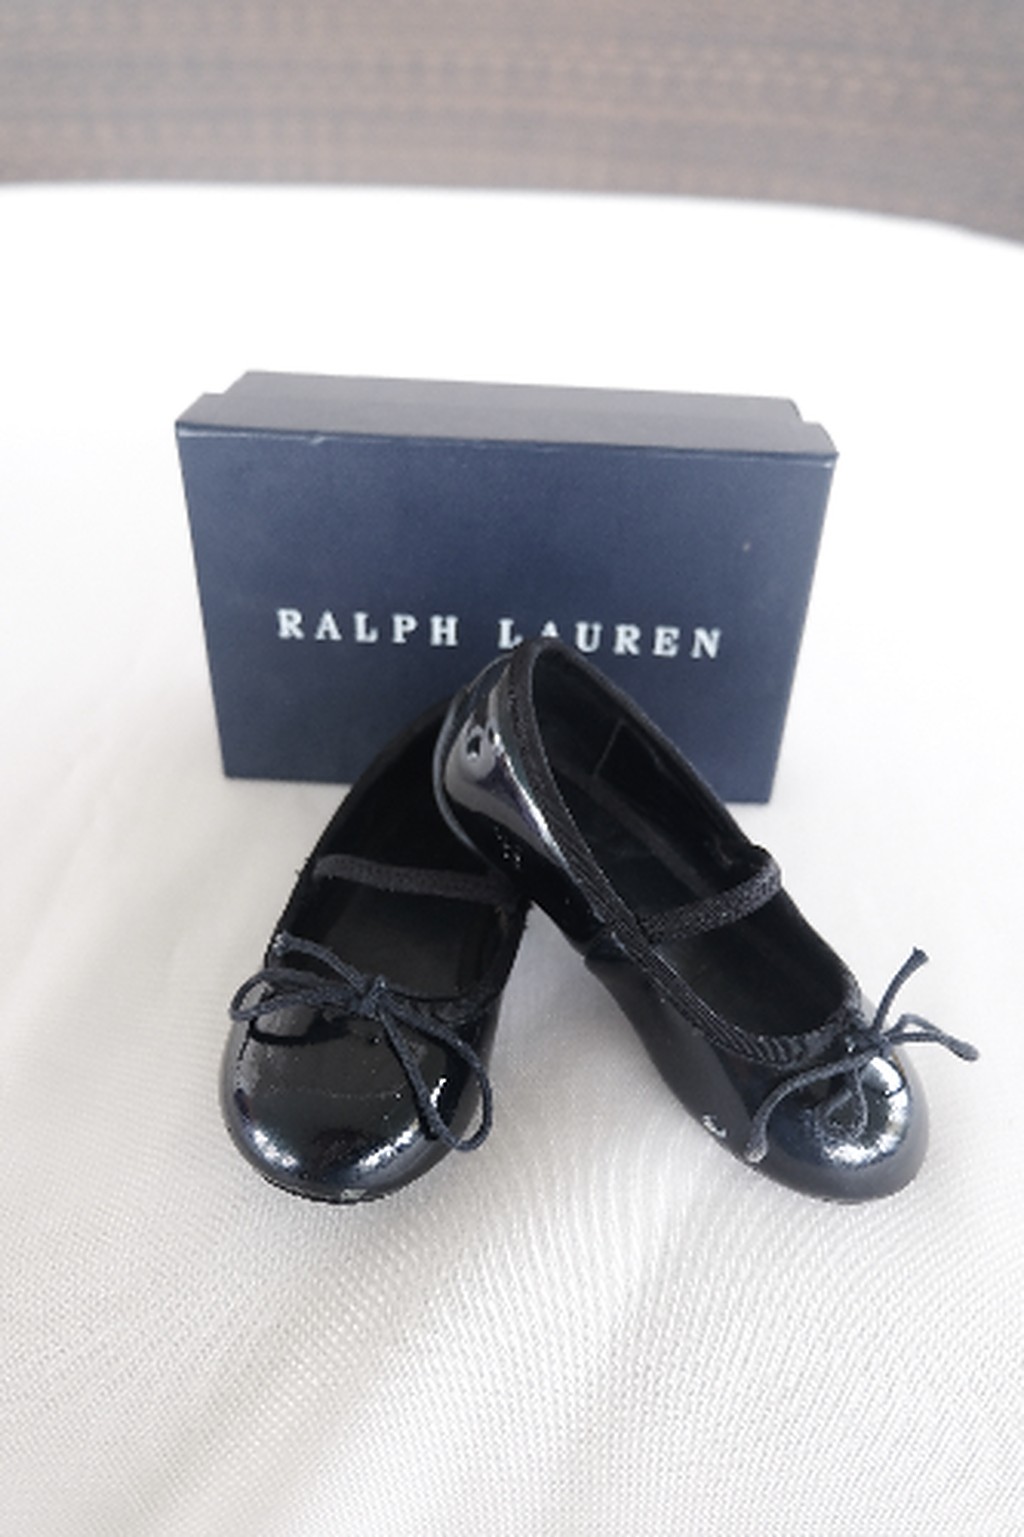 Ralph lauren black patent leather allie